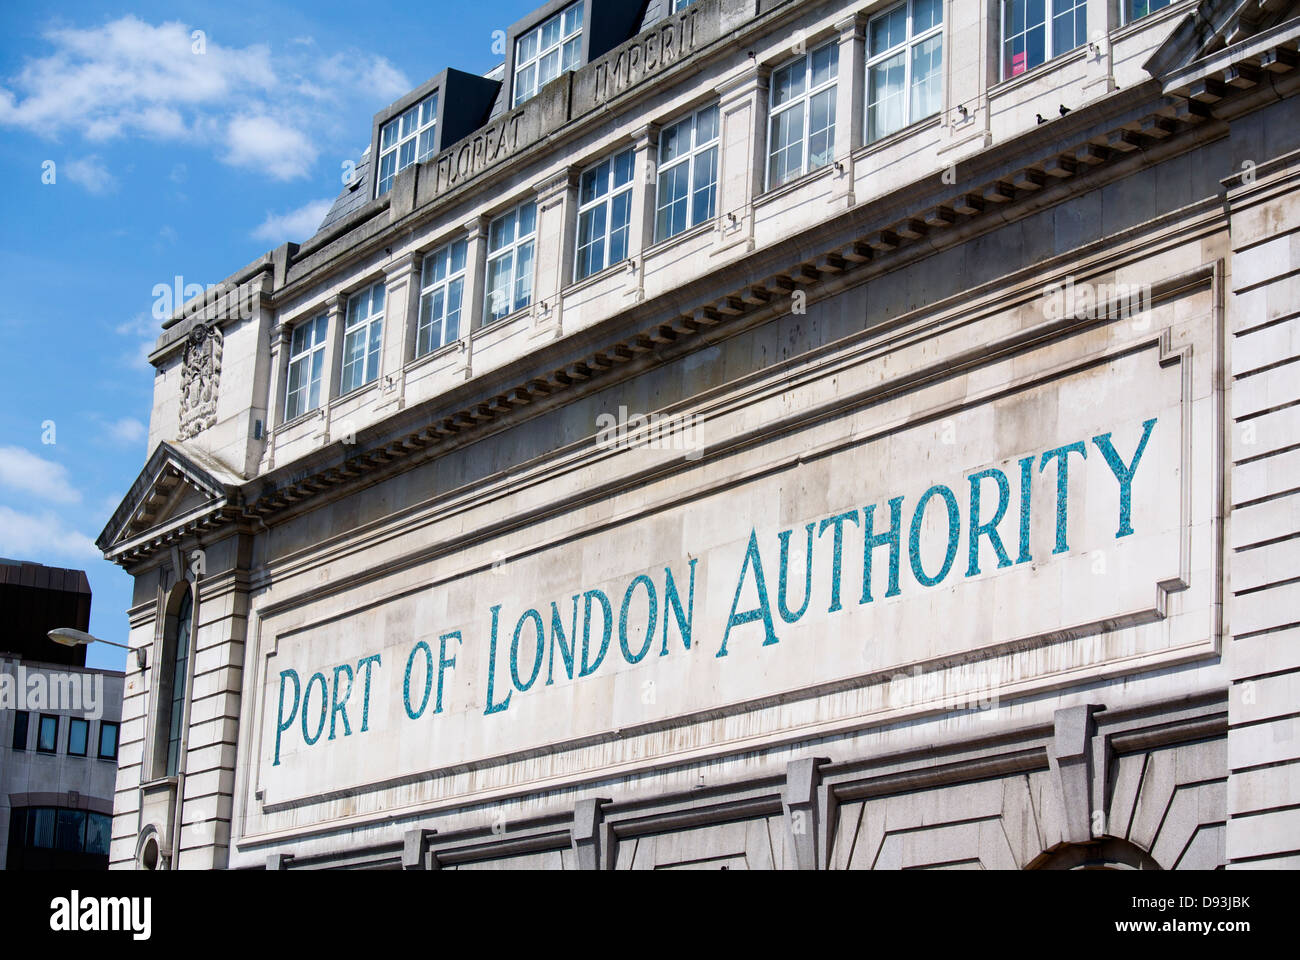 Port of London Authority sign, Charterhouse Street London England. Stock Photo